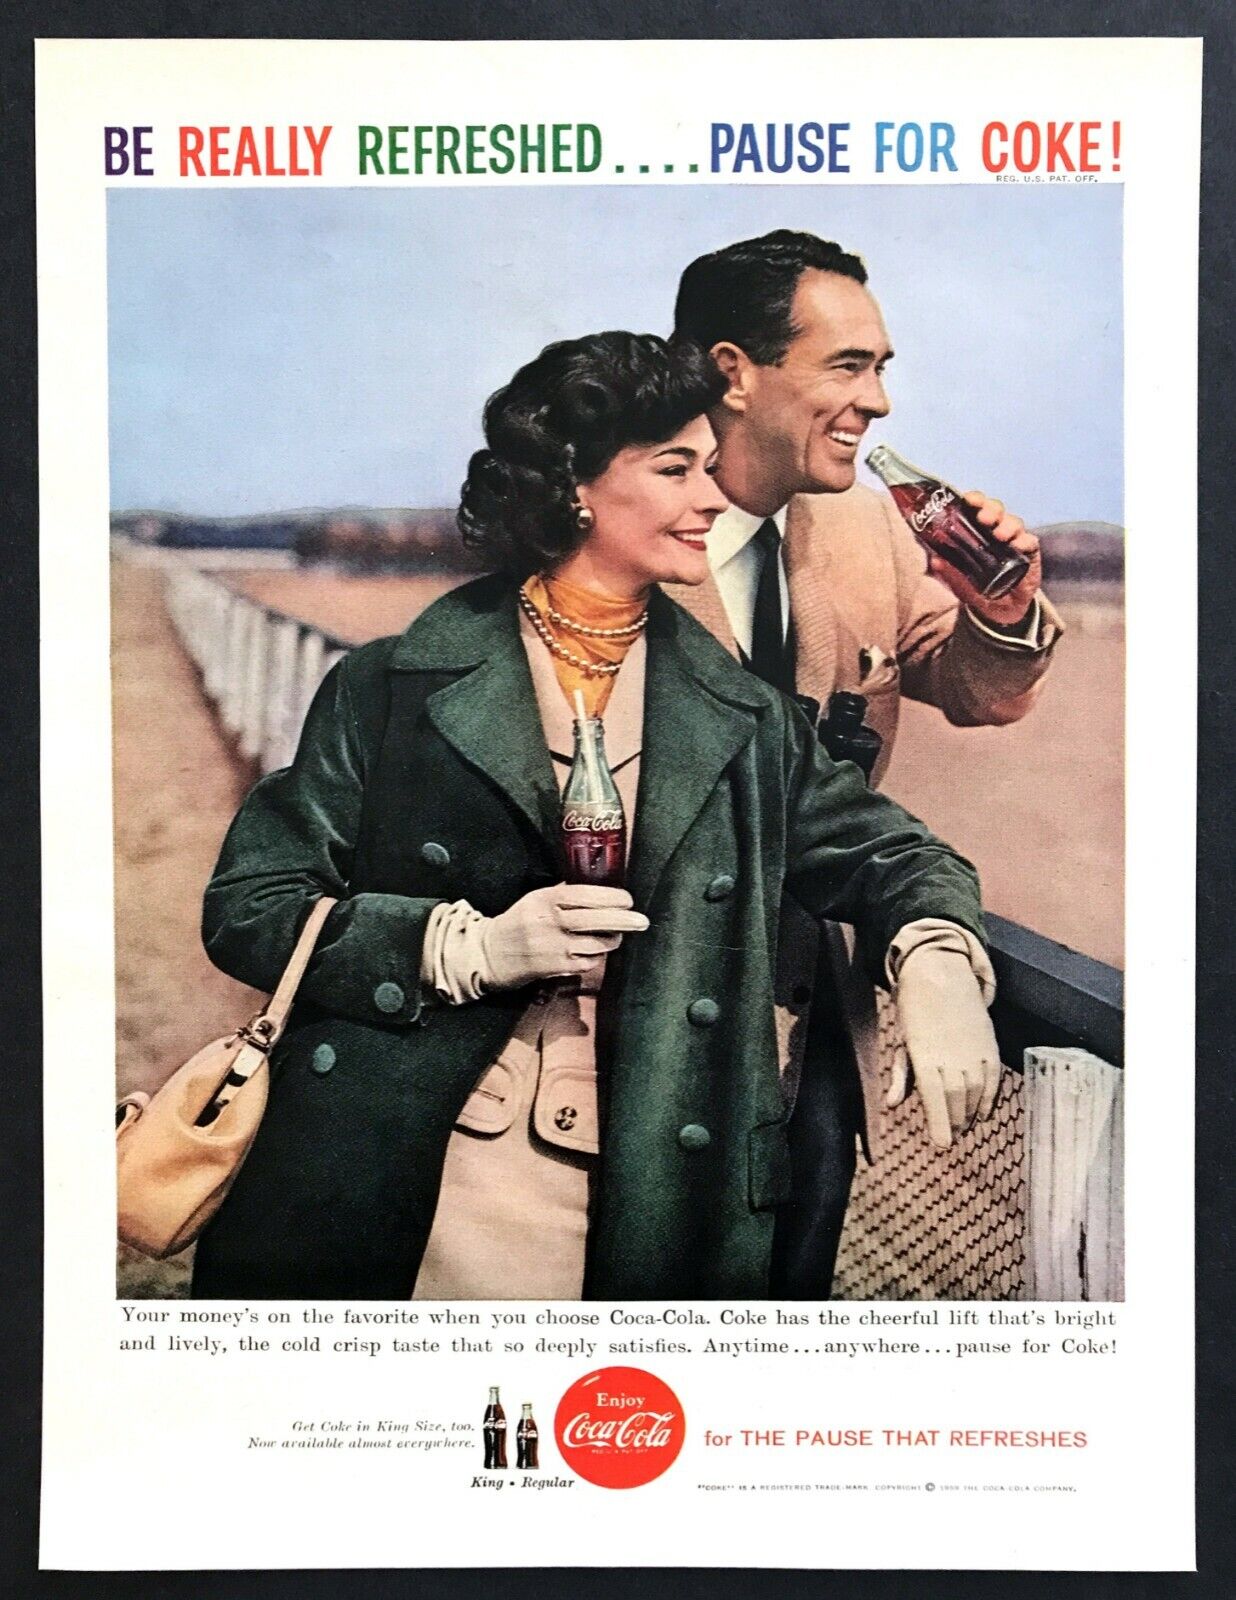 1959 Man & Woman Horse Racing Track photo Coca-Cola Refreshes vintage print ad